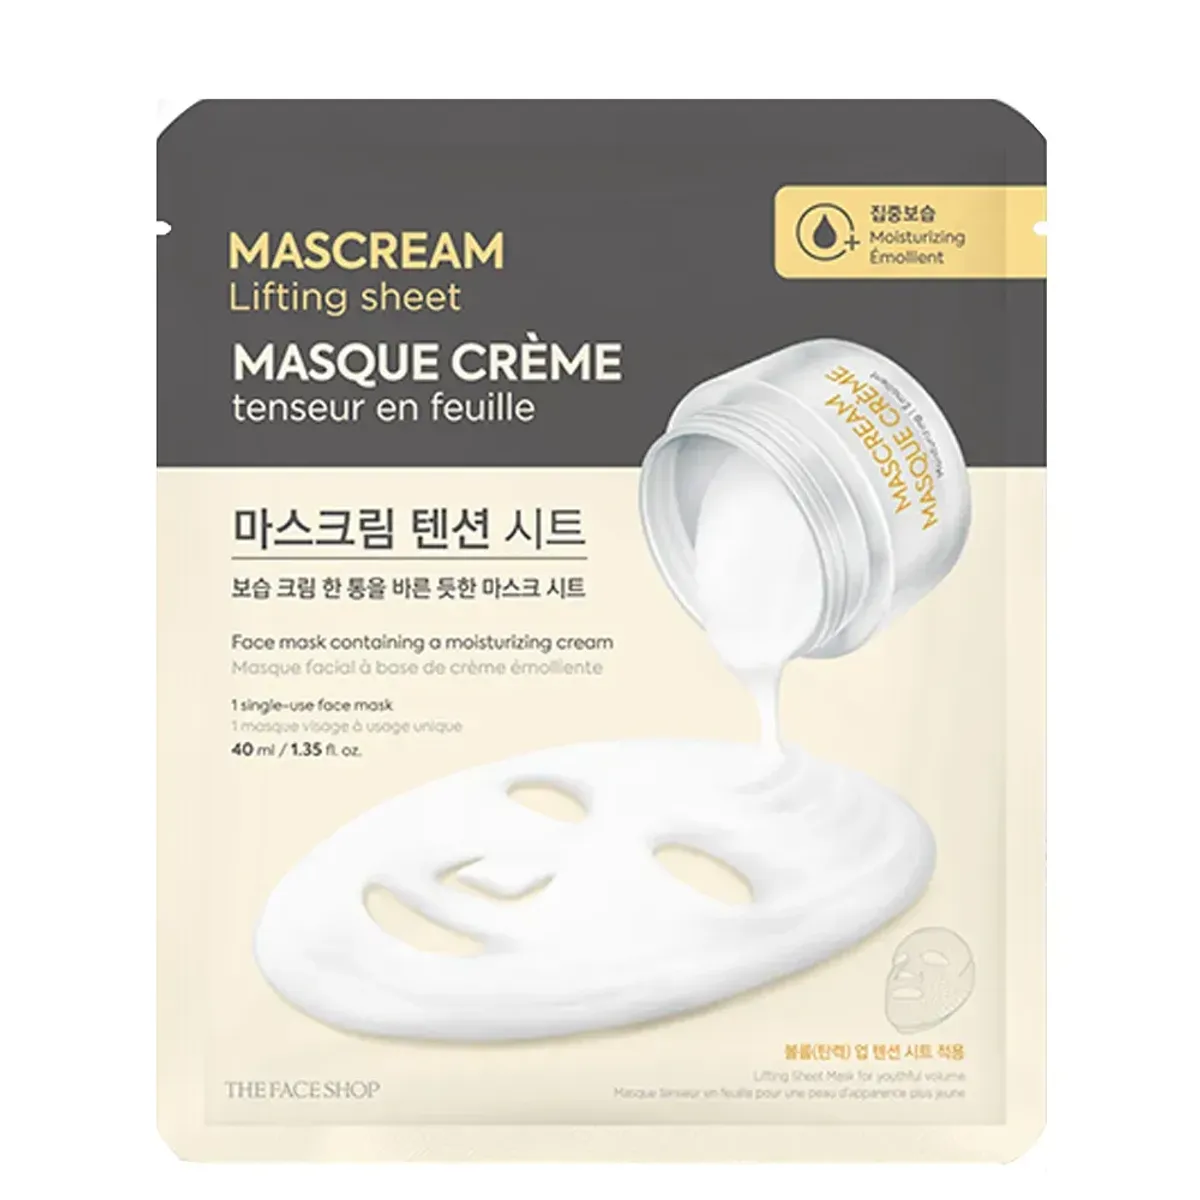 mat-na-cap-am-chuyen-sau-deeply-moisturizing-mascream-lifting-sheet-mask-1